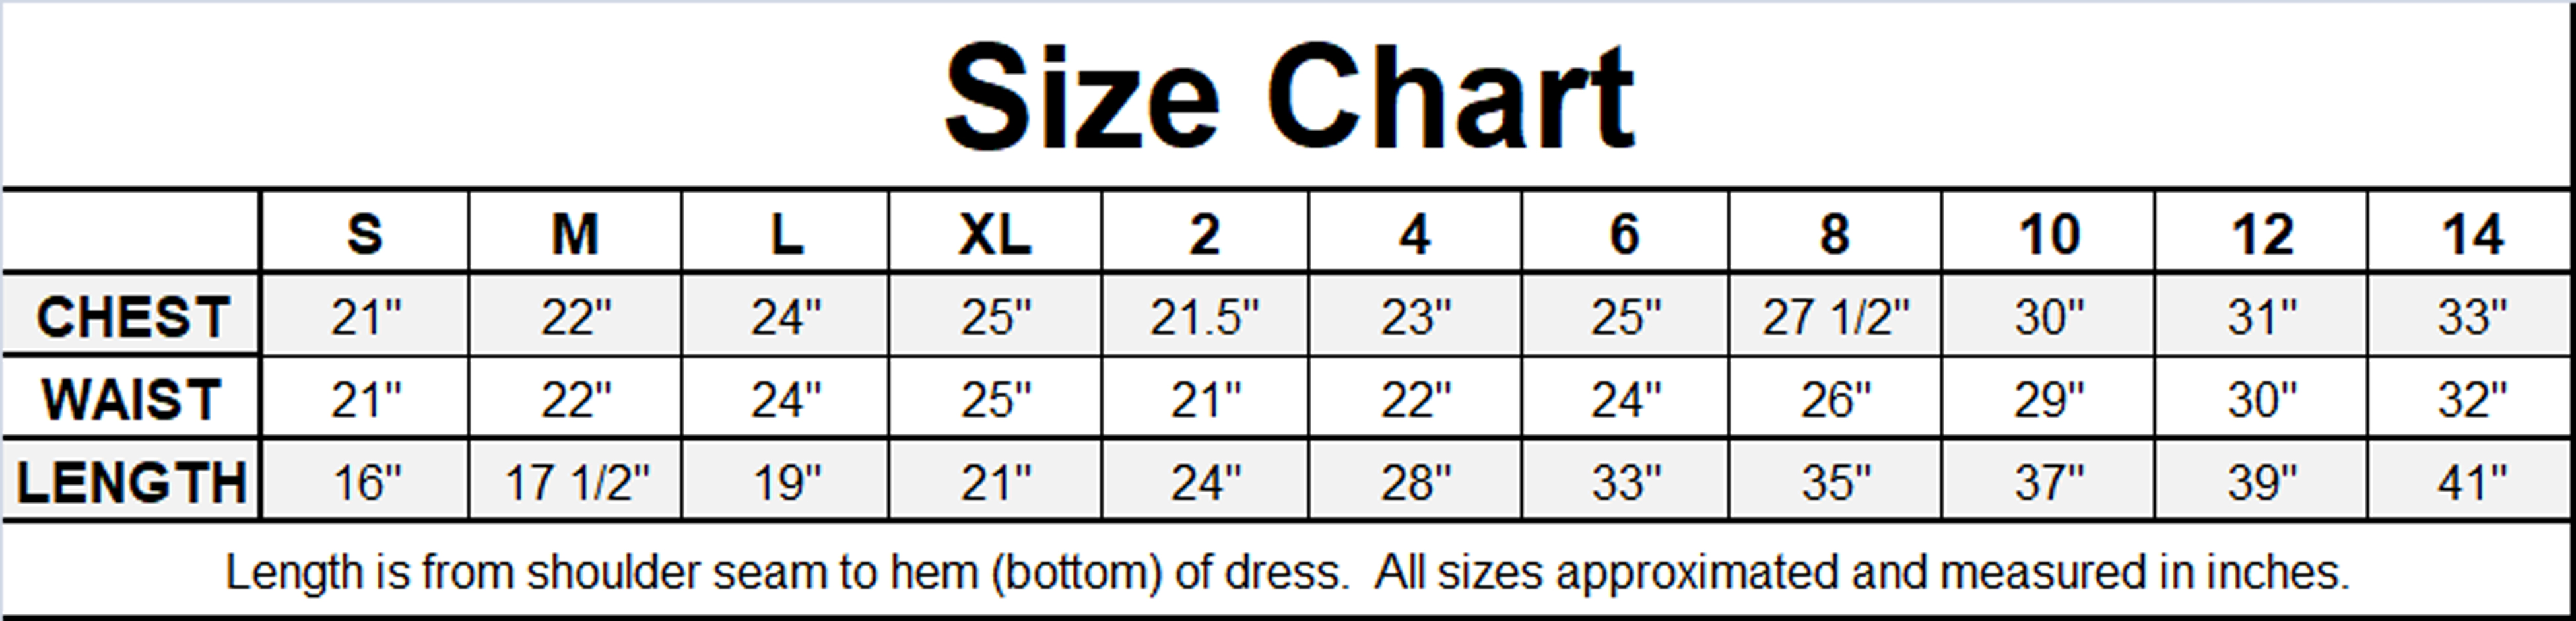 KD-204 Flower Girl Dress Size Chart Image - One Small Child